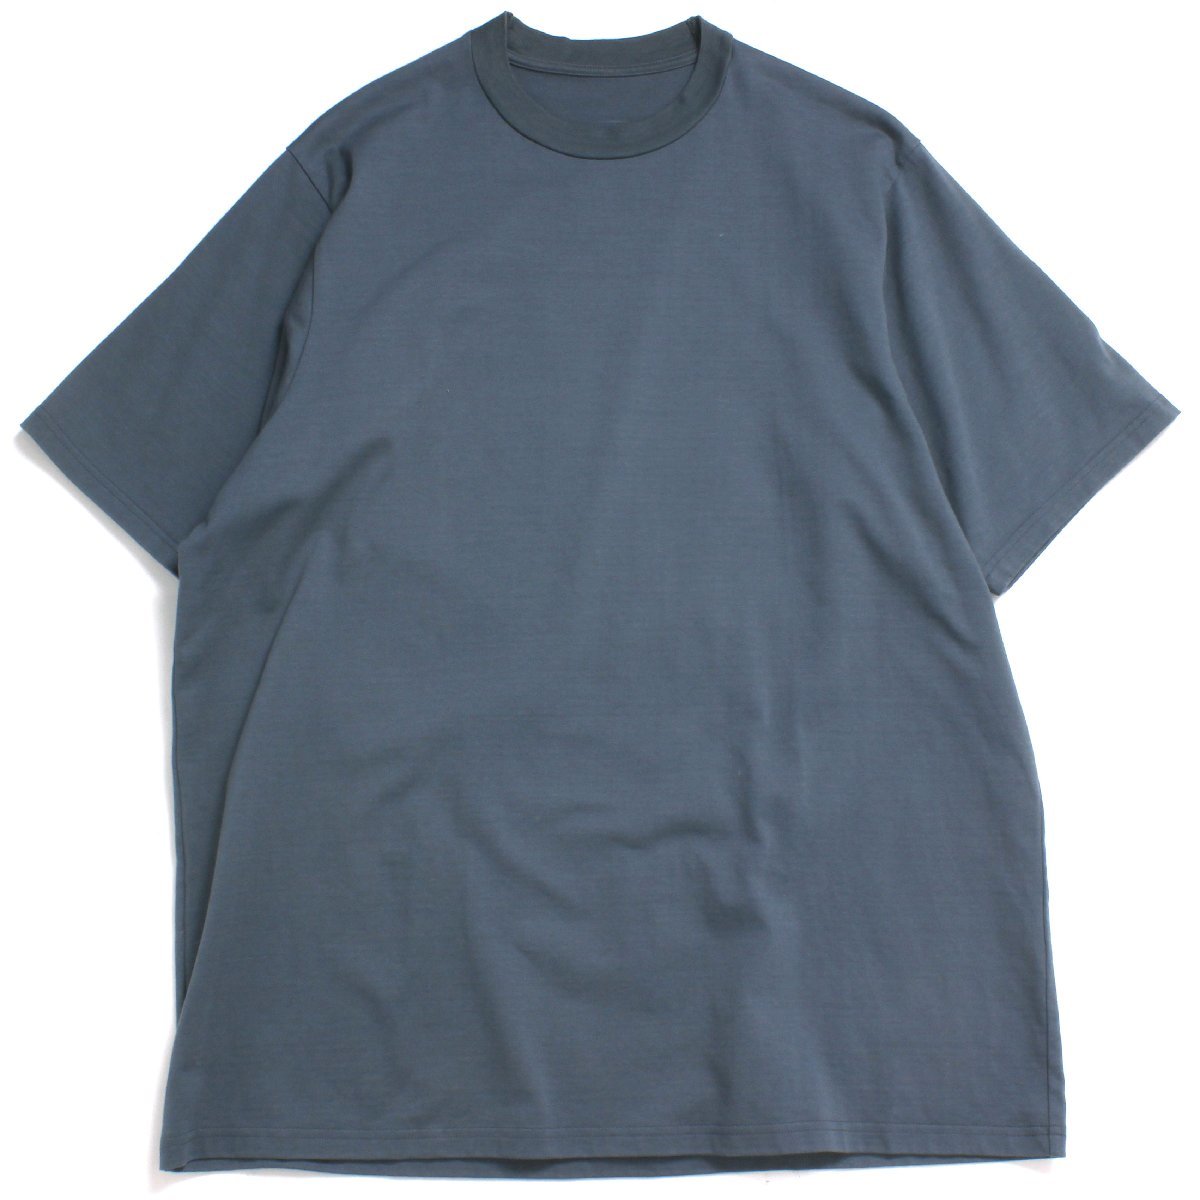 POSTALCO クルーネックT オーガニックツインジャージ 定価17,600円 sizeL ブルーグレー ポスタルコ 半袖Tシャツ